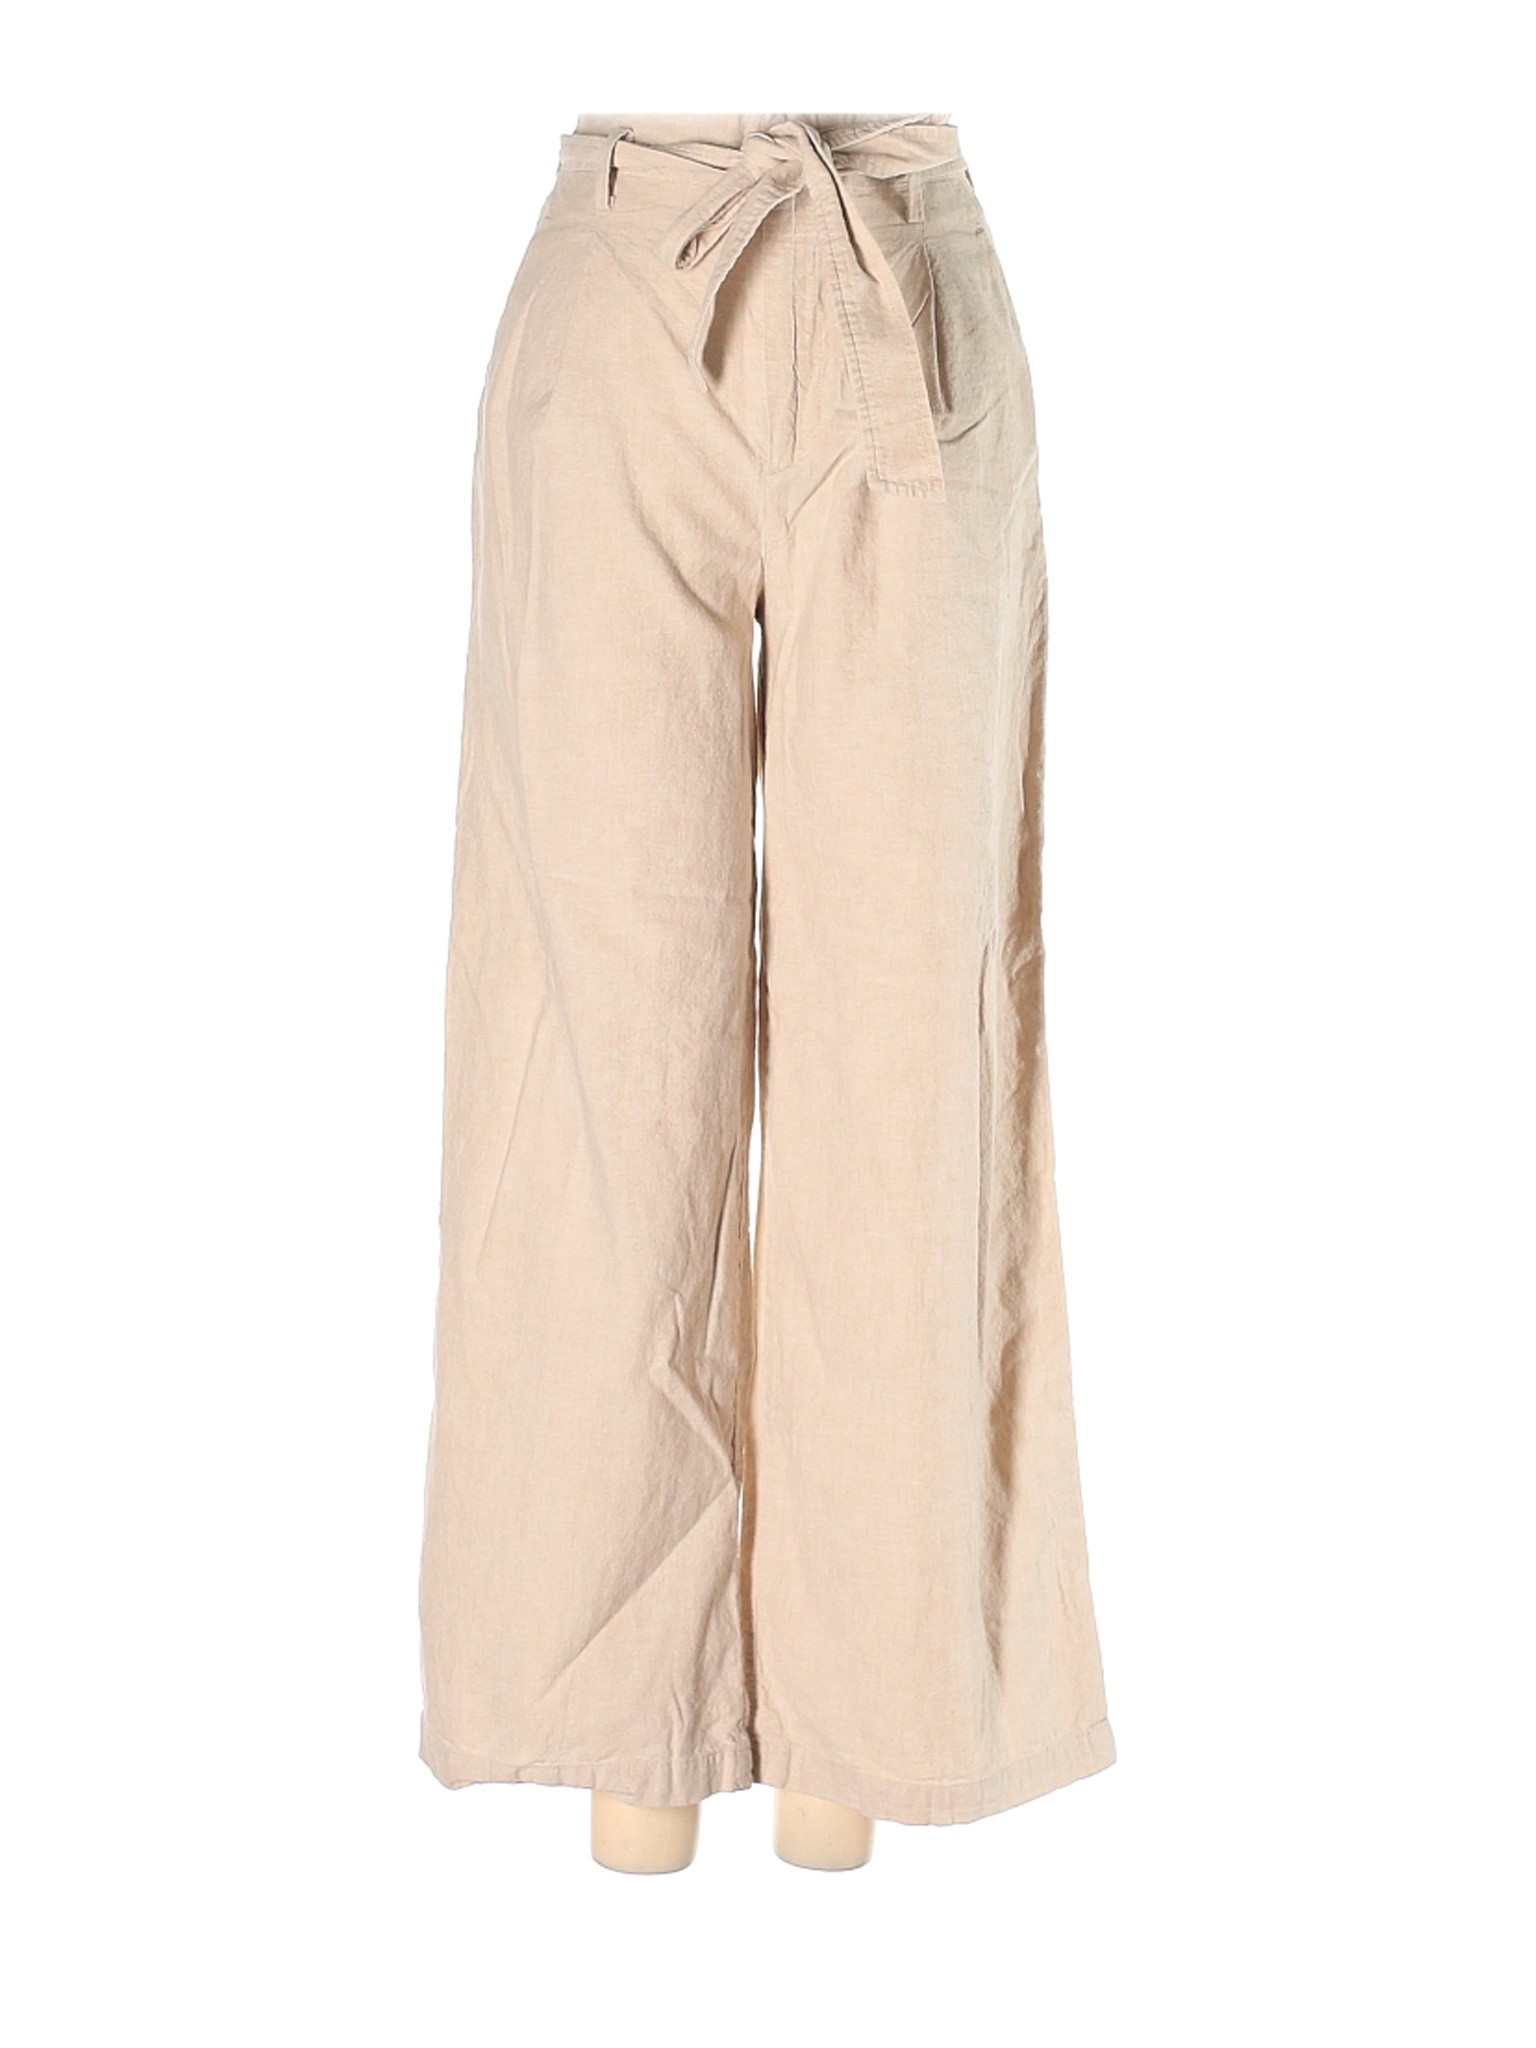 Uniqlo Women Brown Casual Pants XS | eBay